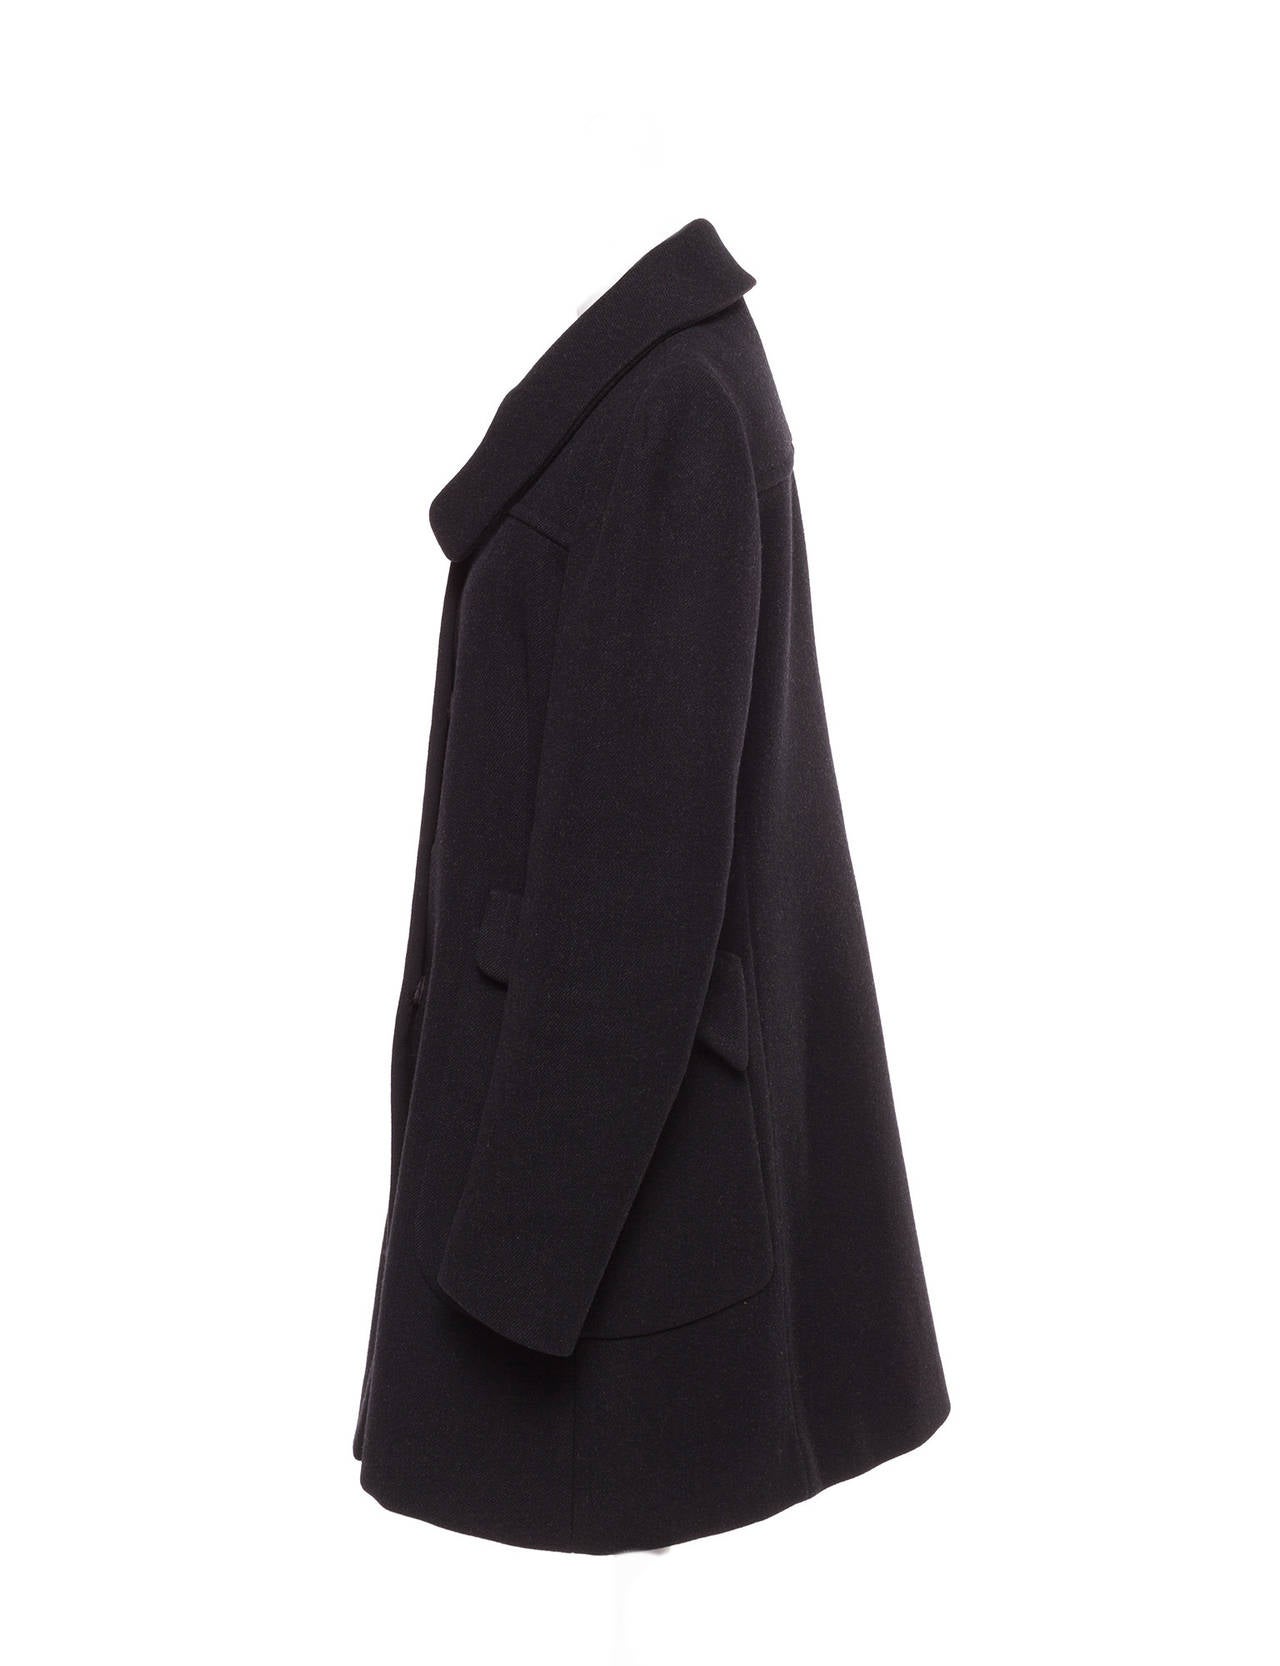 Women's Prada minimal Wool coat with collar detail and large pockets, Sz. M